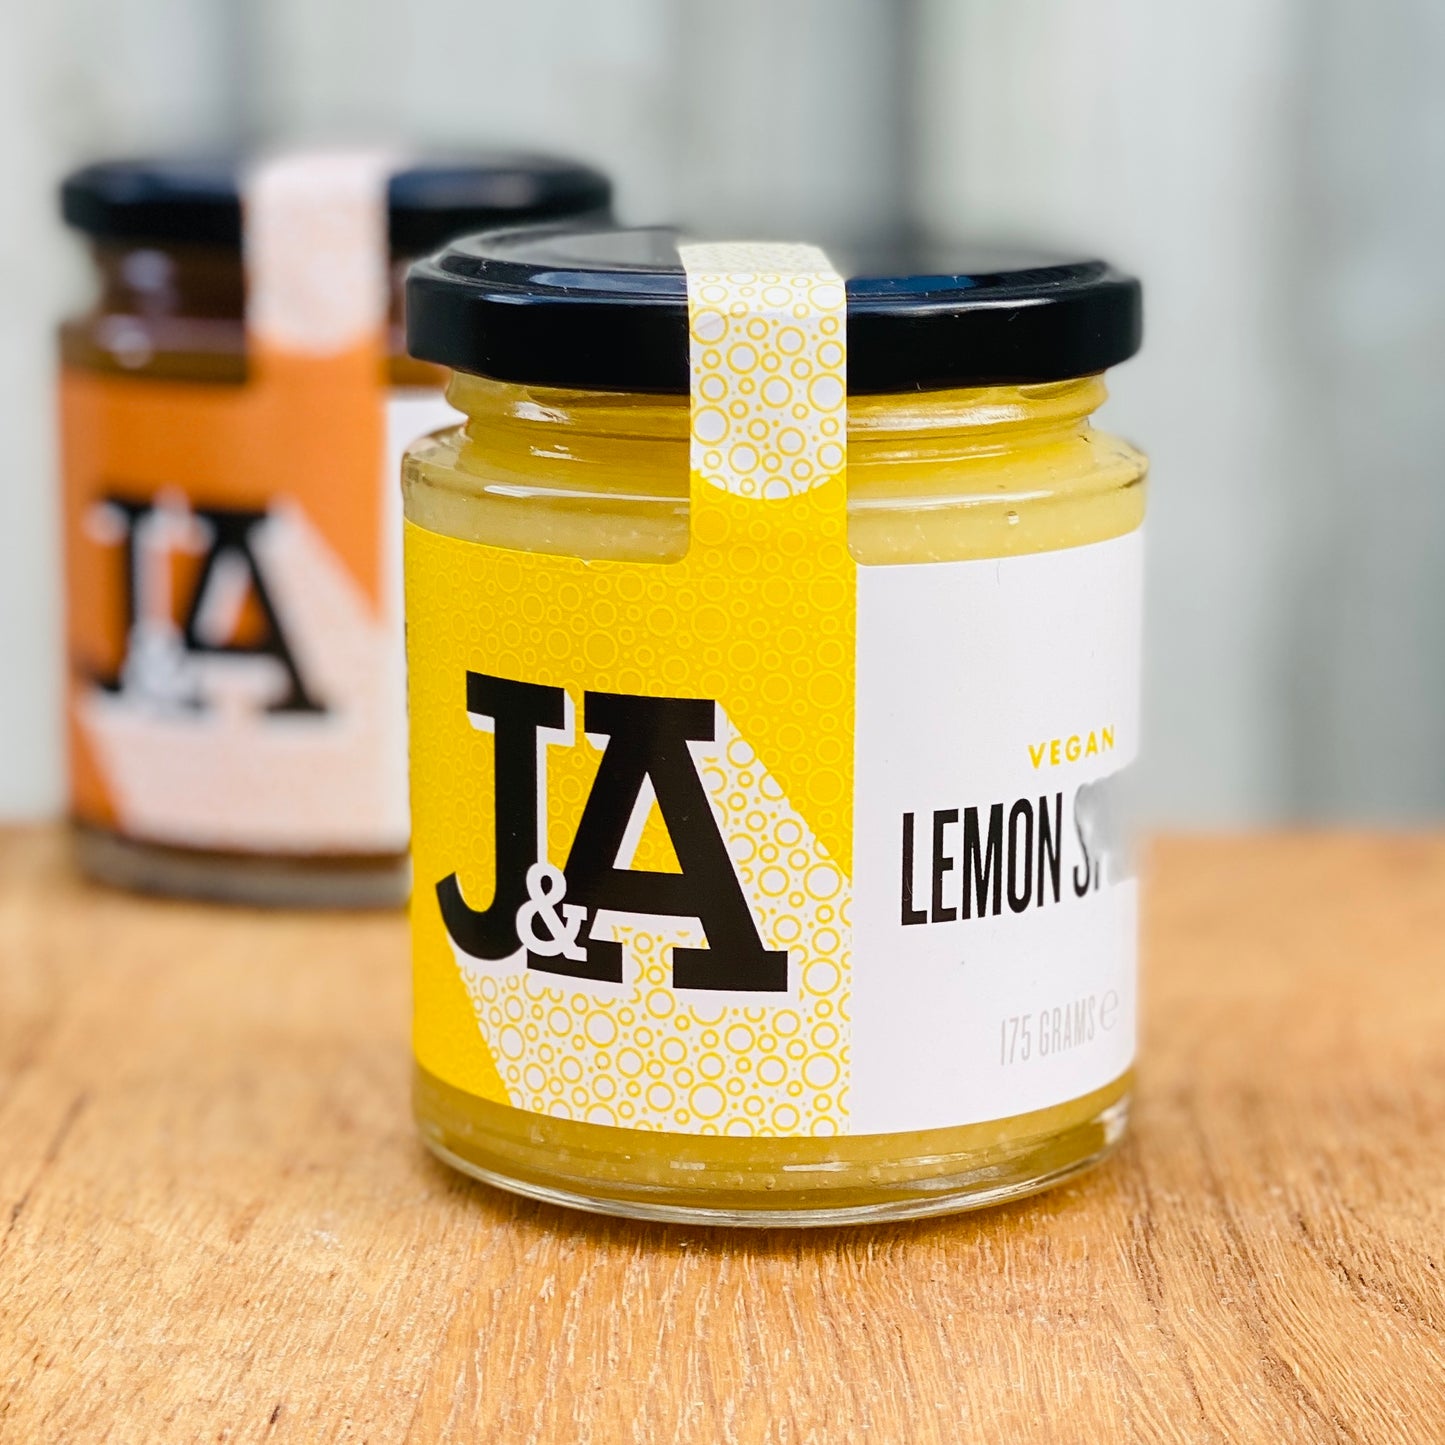 Lifestyle image of Janda Vegan Lemon Curd